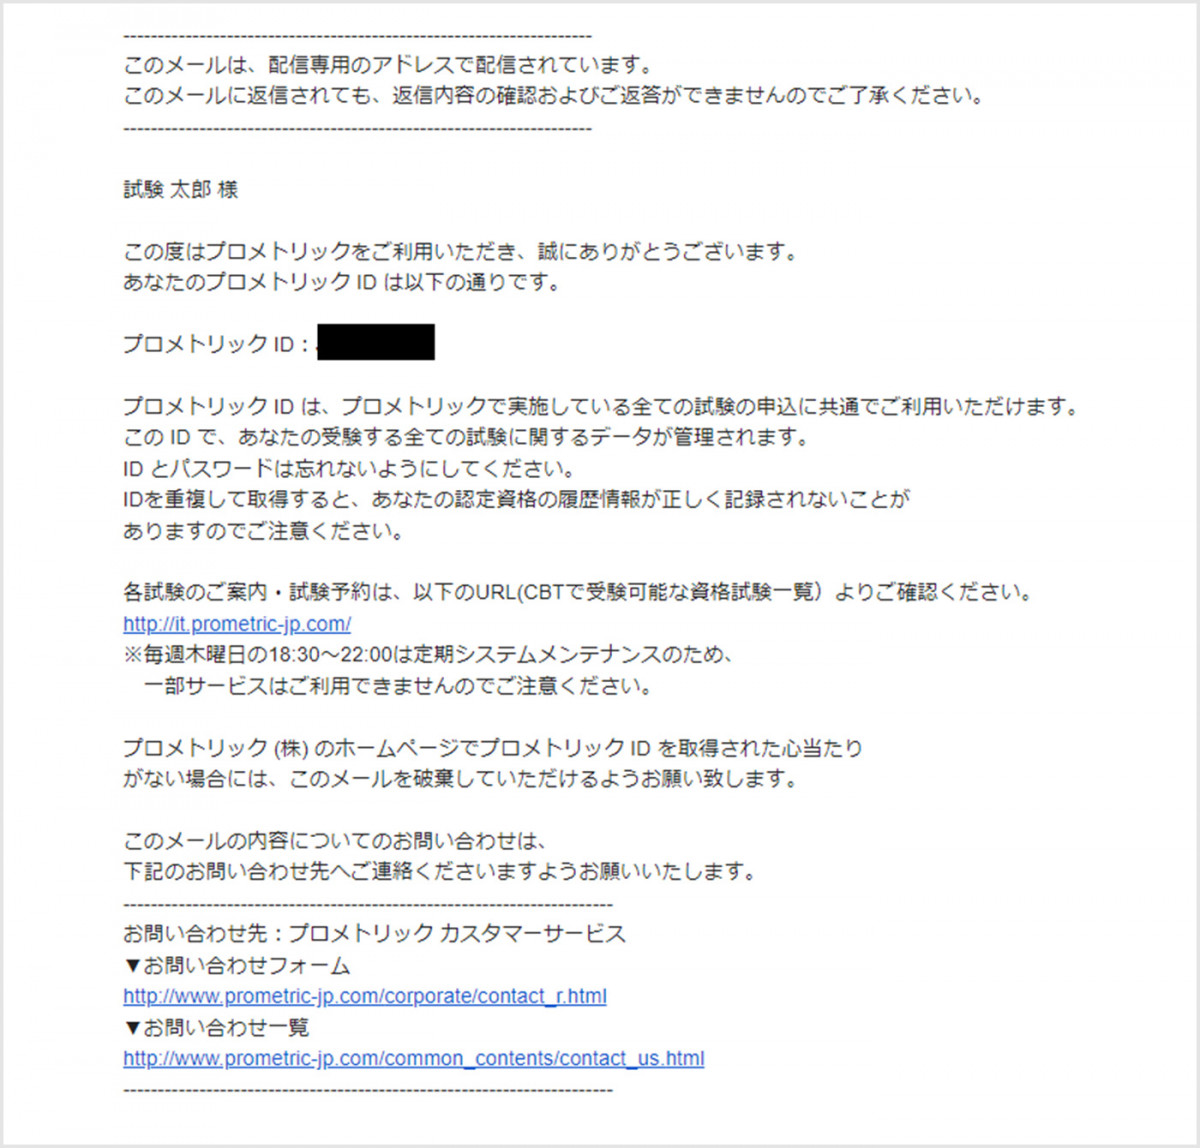 「prometric@prometric-jp.com」より通知されたメールサンプル